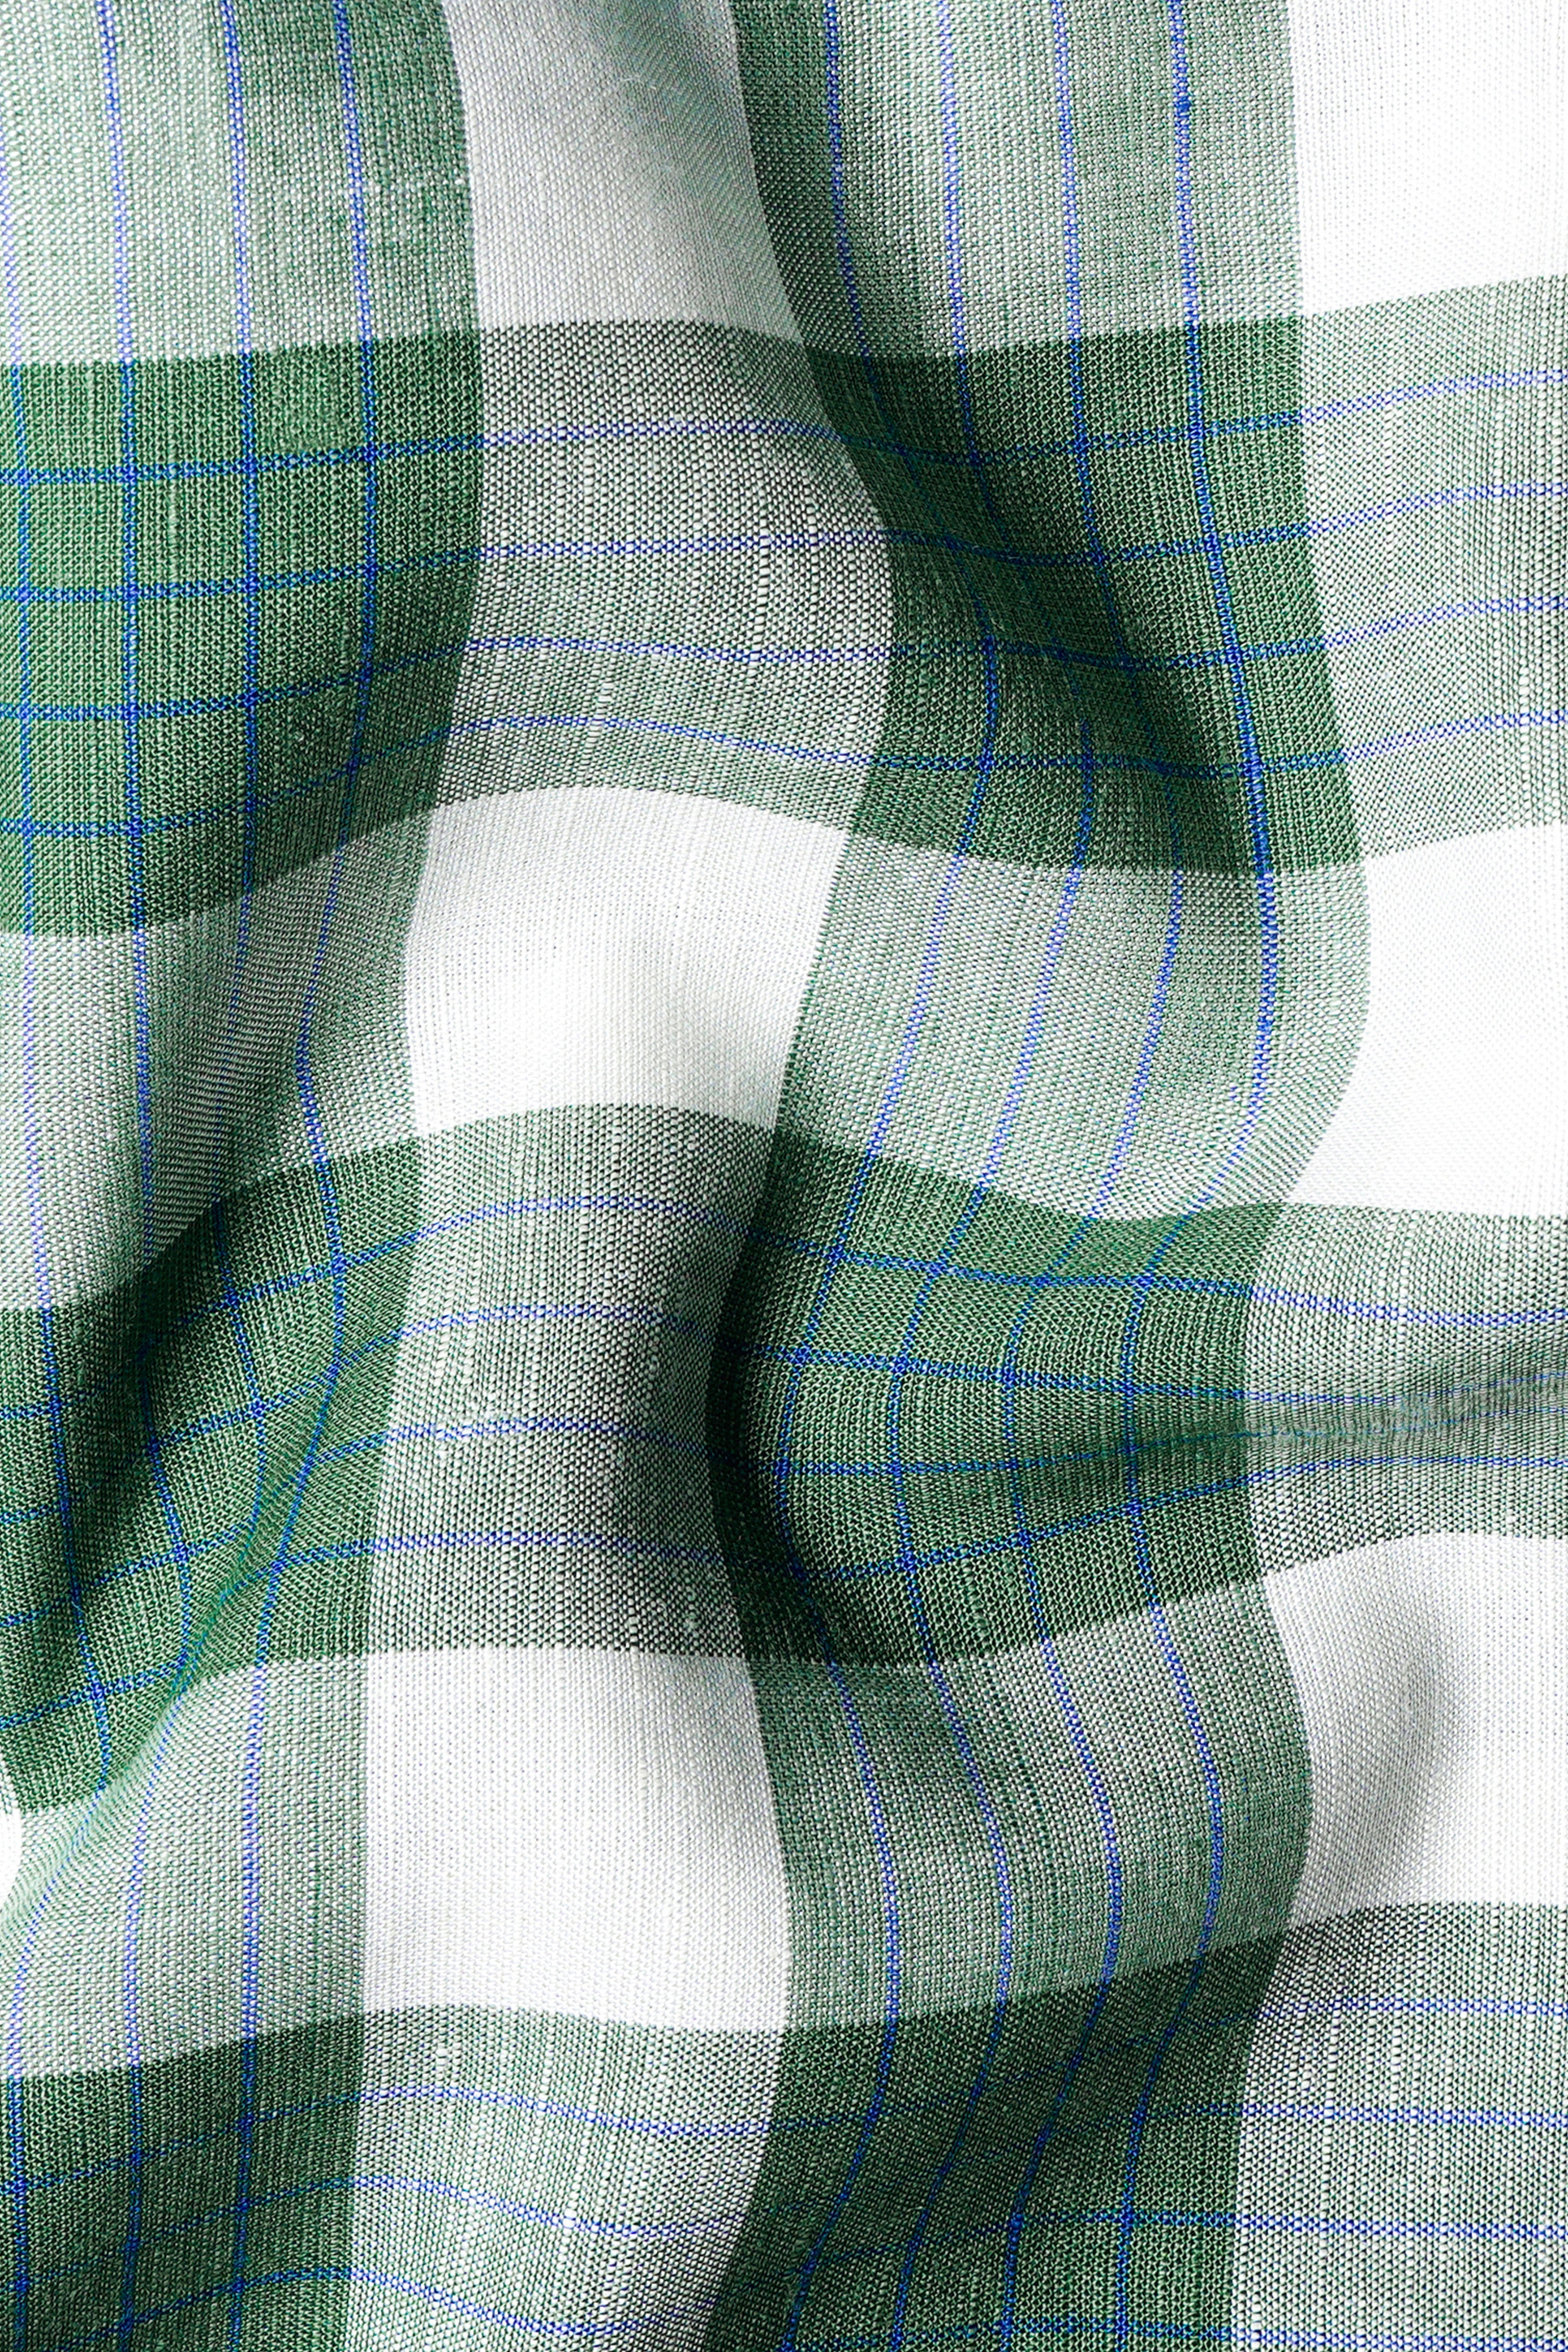 Pine Green and Pumice Gray Checkered Luxurious Linen Shirt